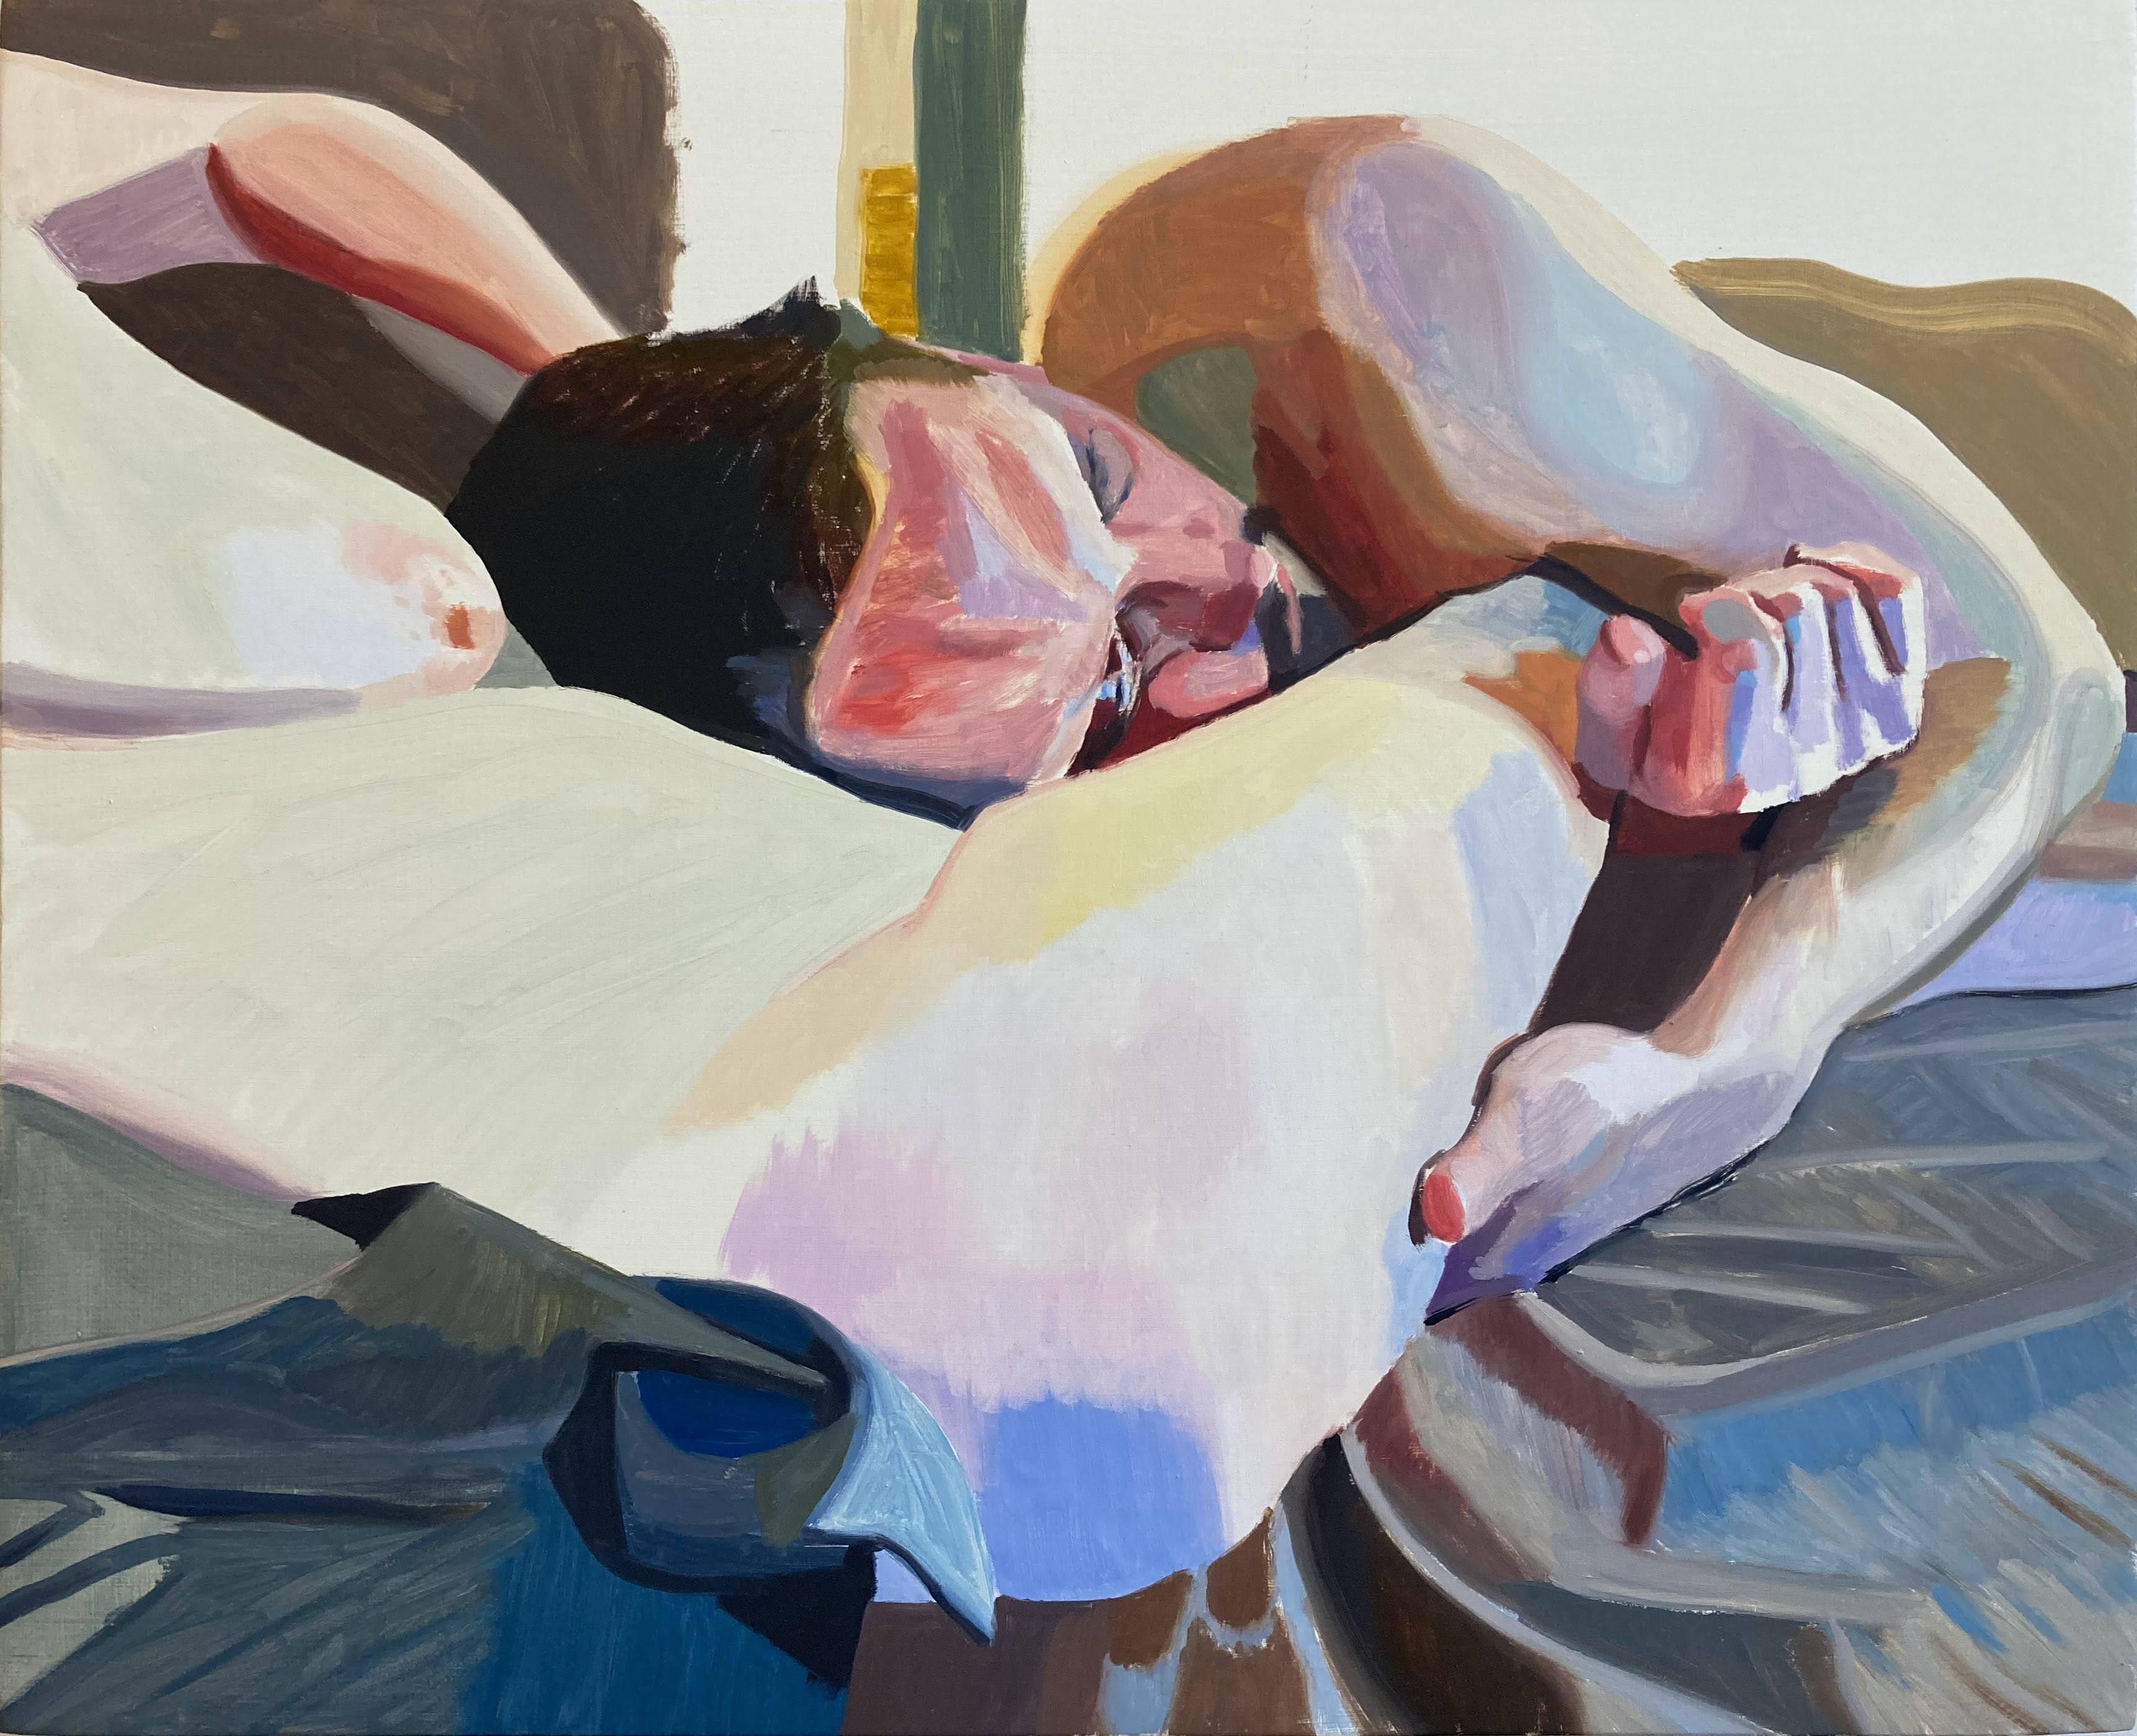 Figurative Painting Chelsea Gibson - "Fawn" Peinture figurative contemporaine